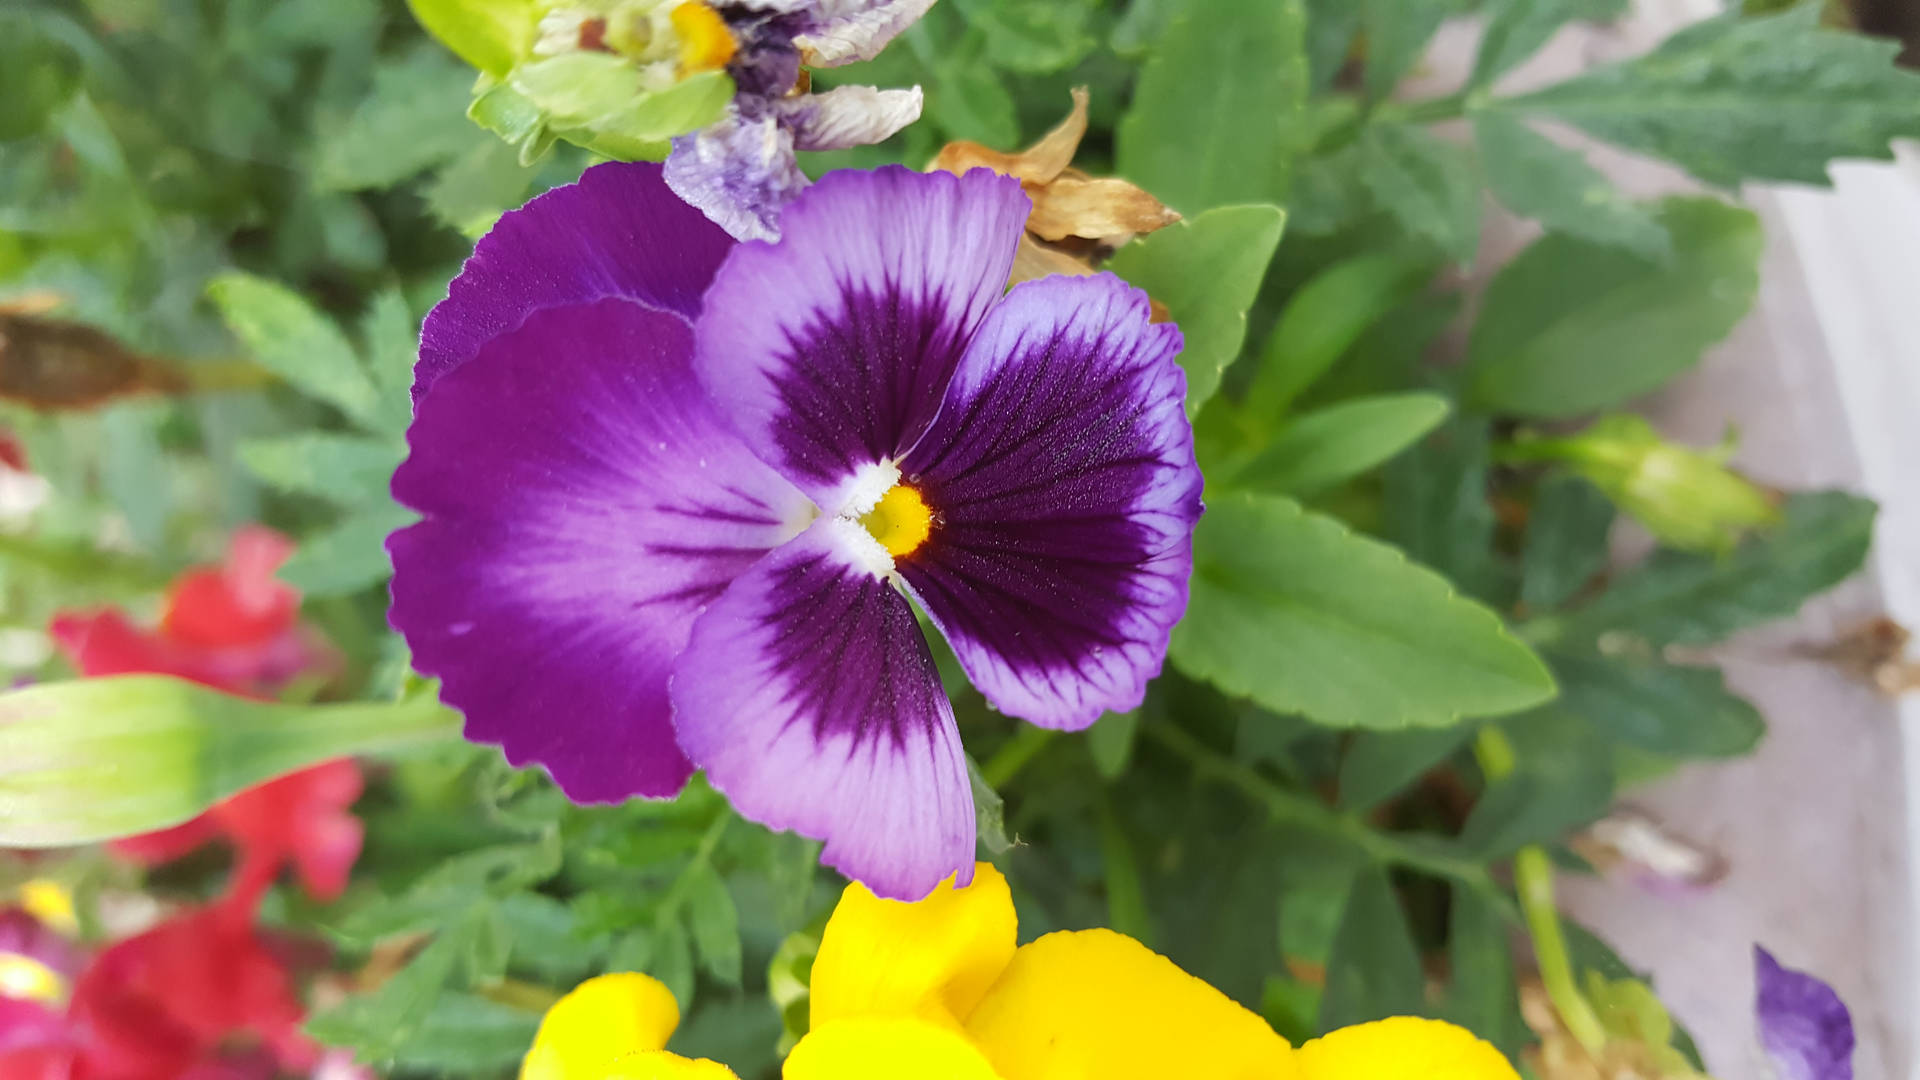 Enchanting Purple-yellow Flower In Bloom Background